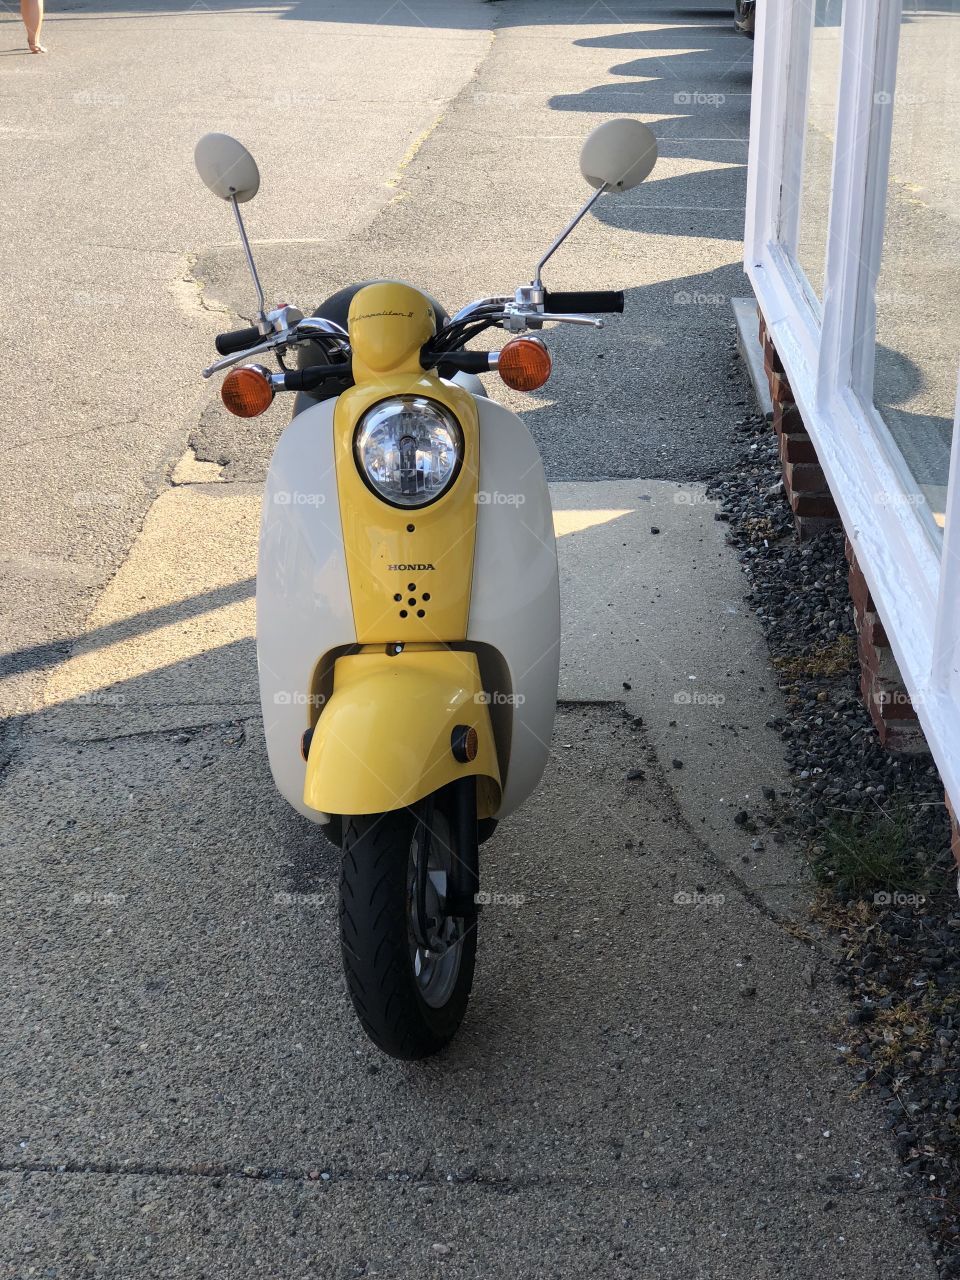 Rockport, Massachusetts “ Yellow Rider”